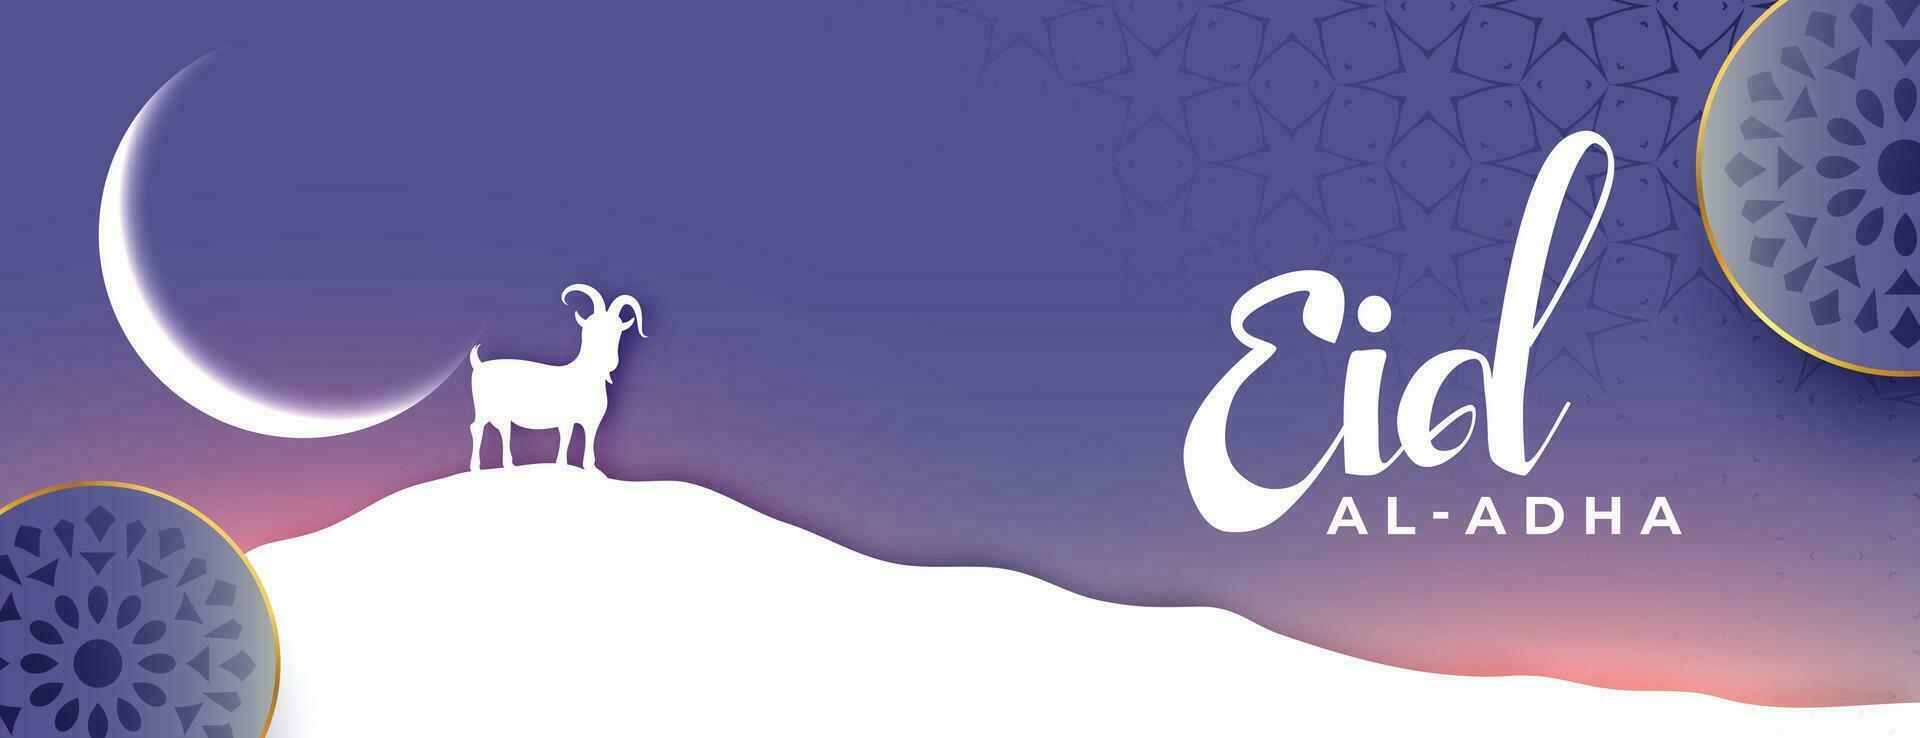 eid al adha Bakri festival banier ontwerp vector